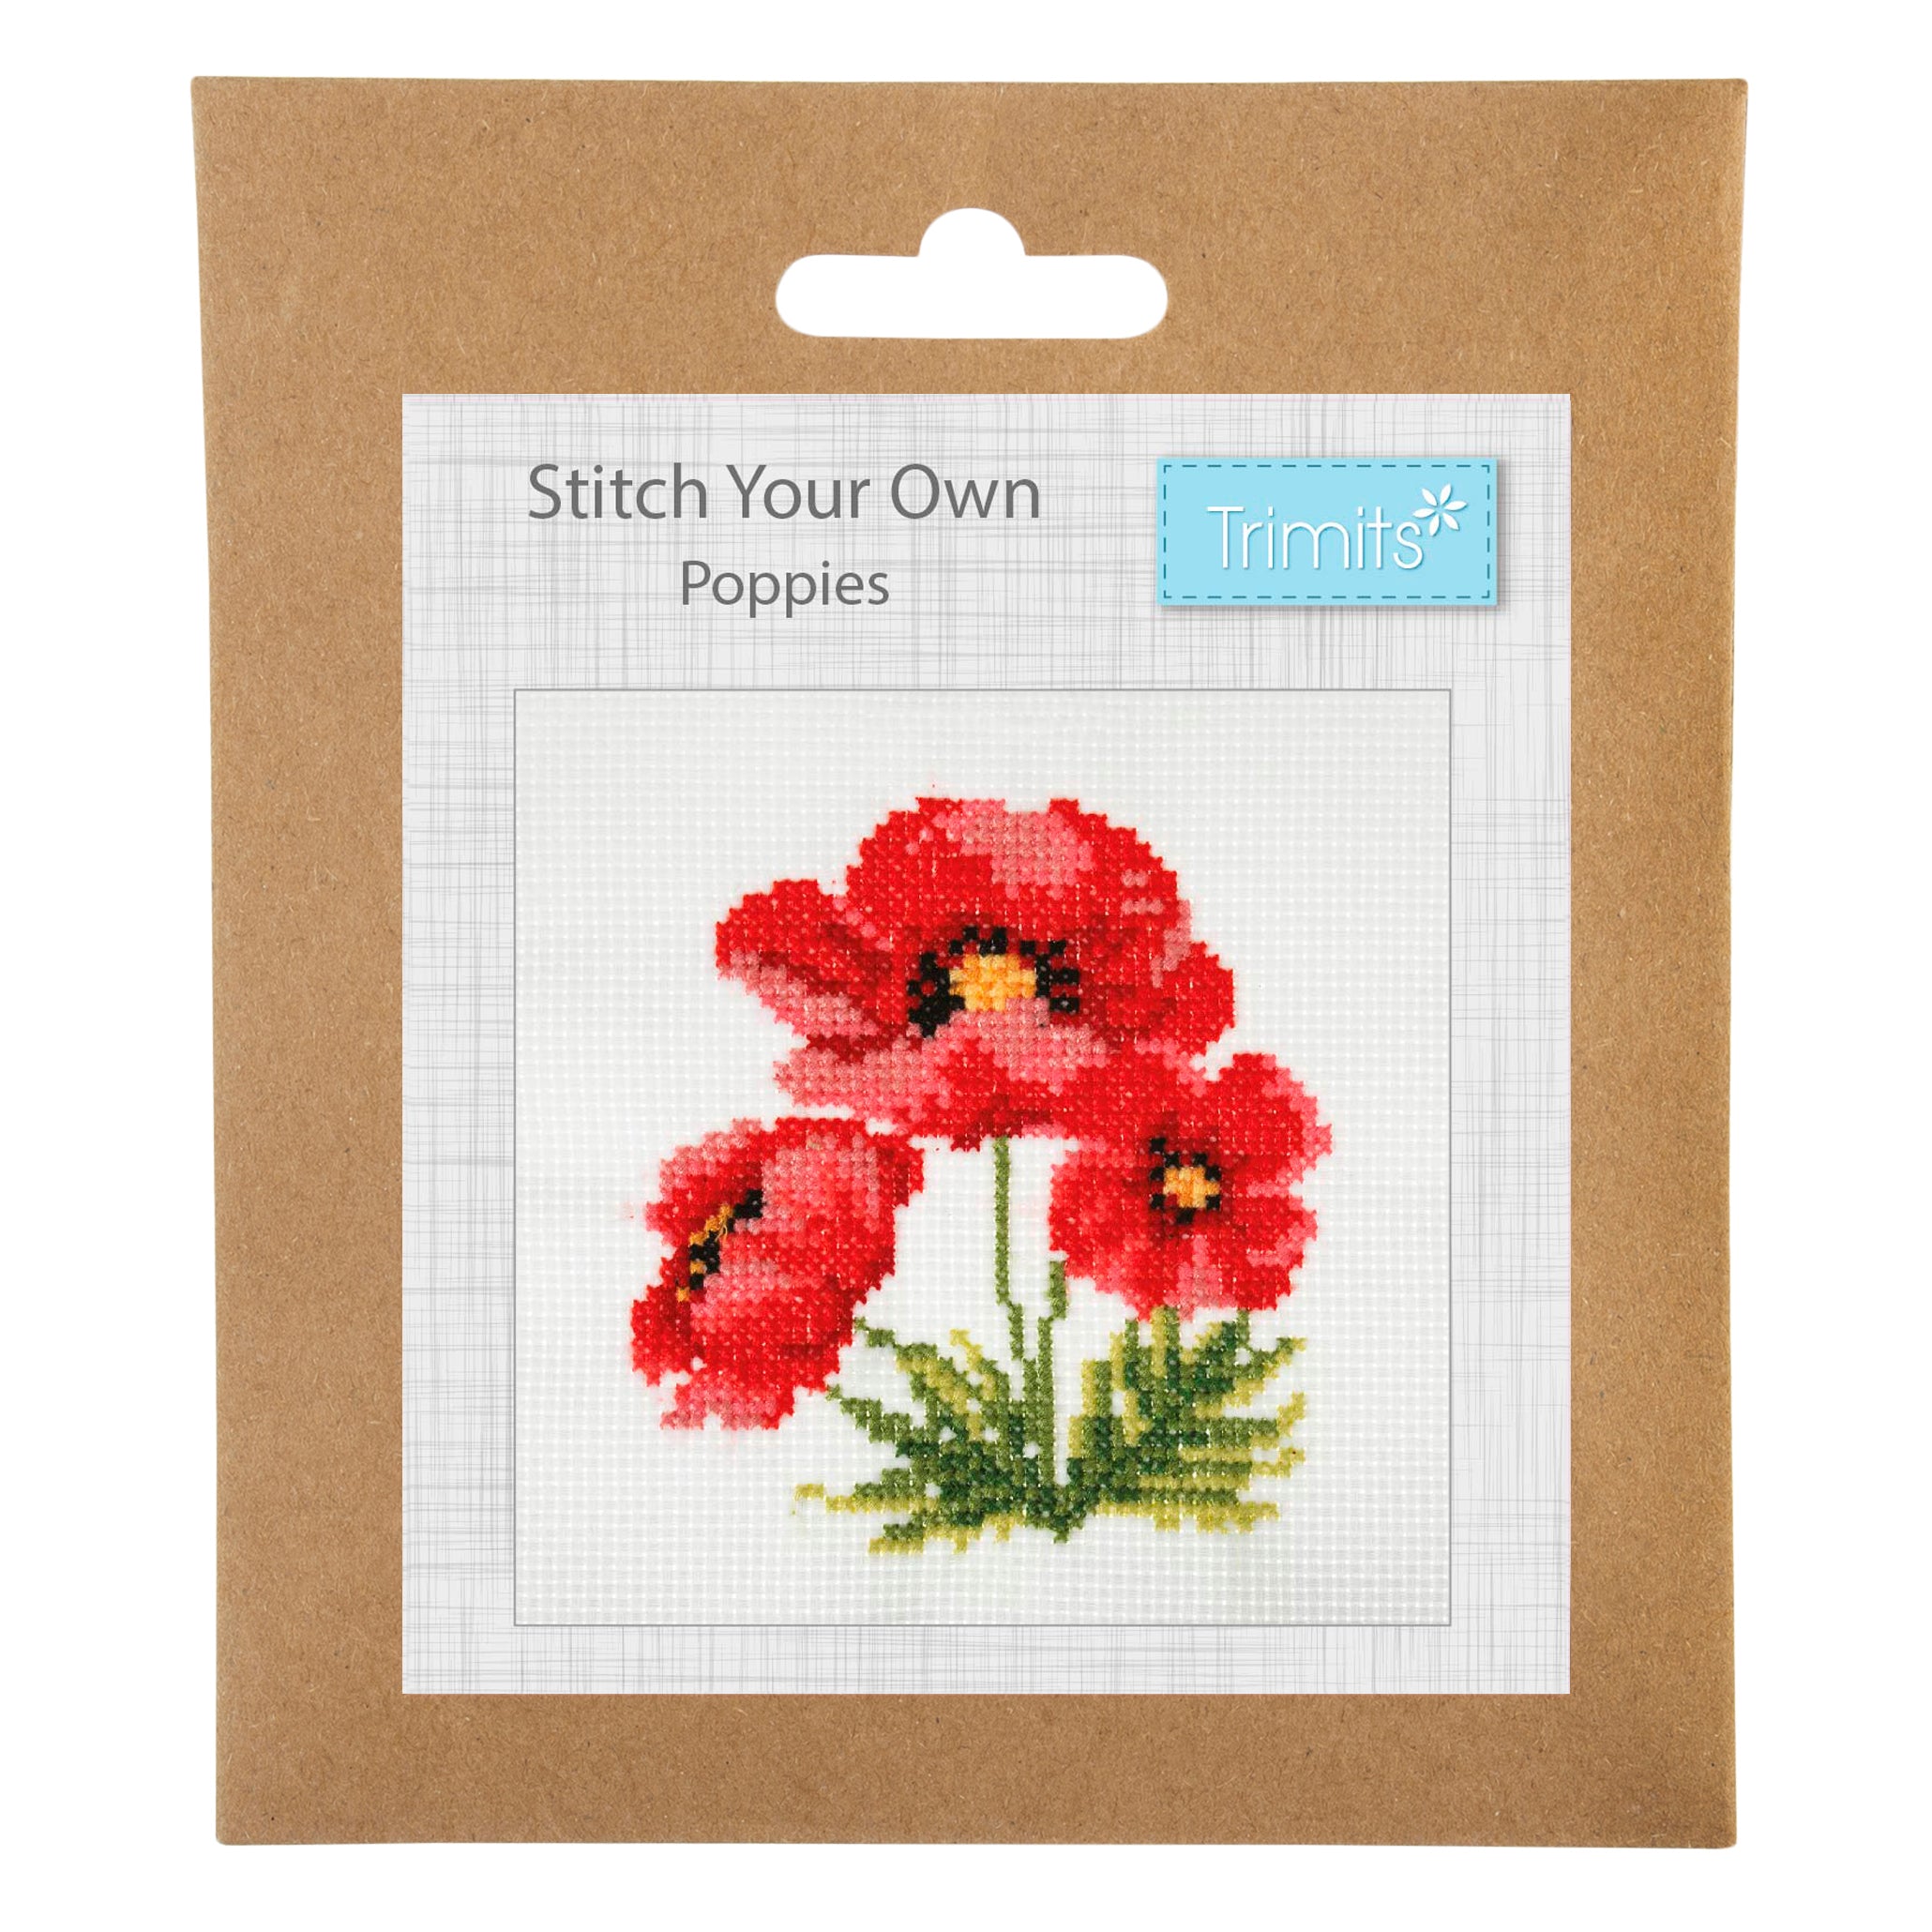 Trimits Mini Counted Cross Stitch Kit: Poppies